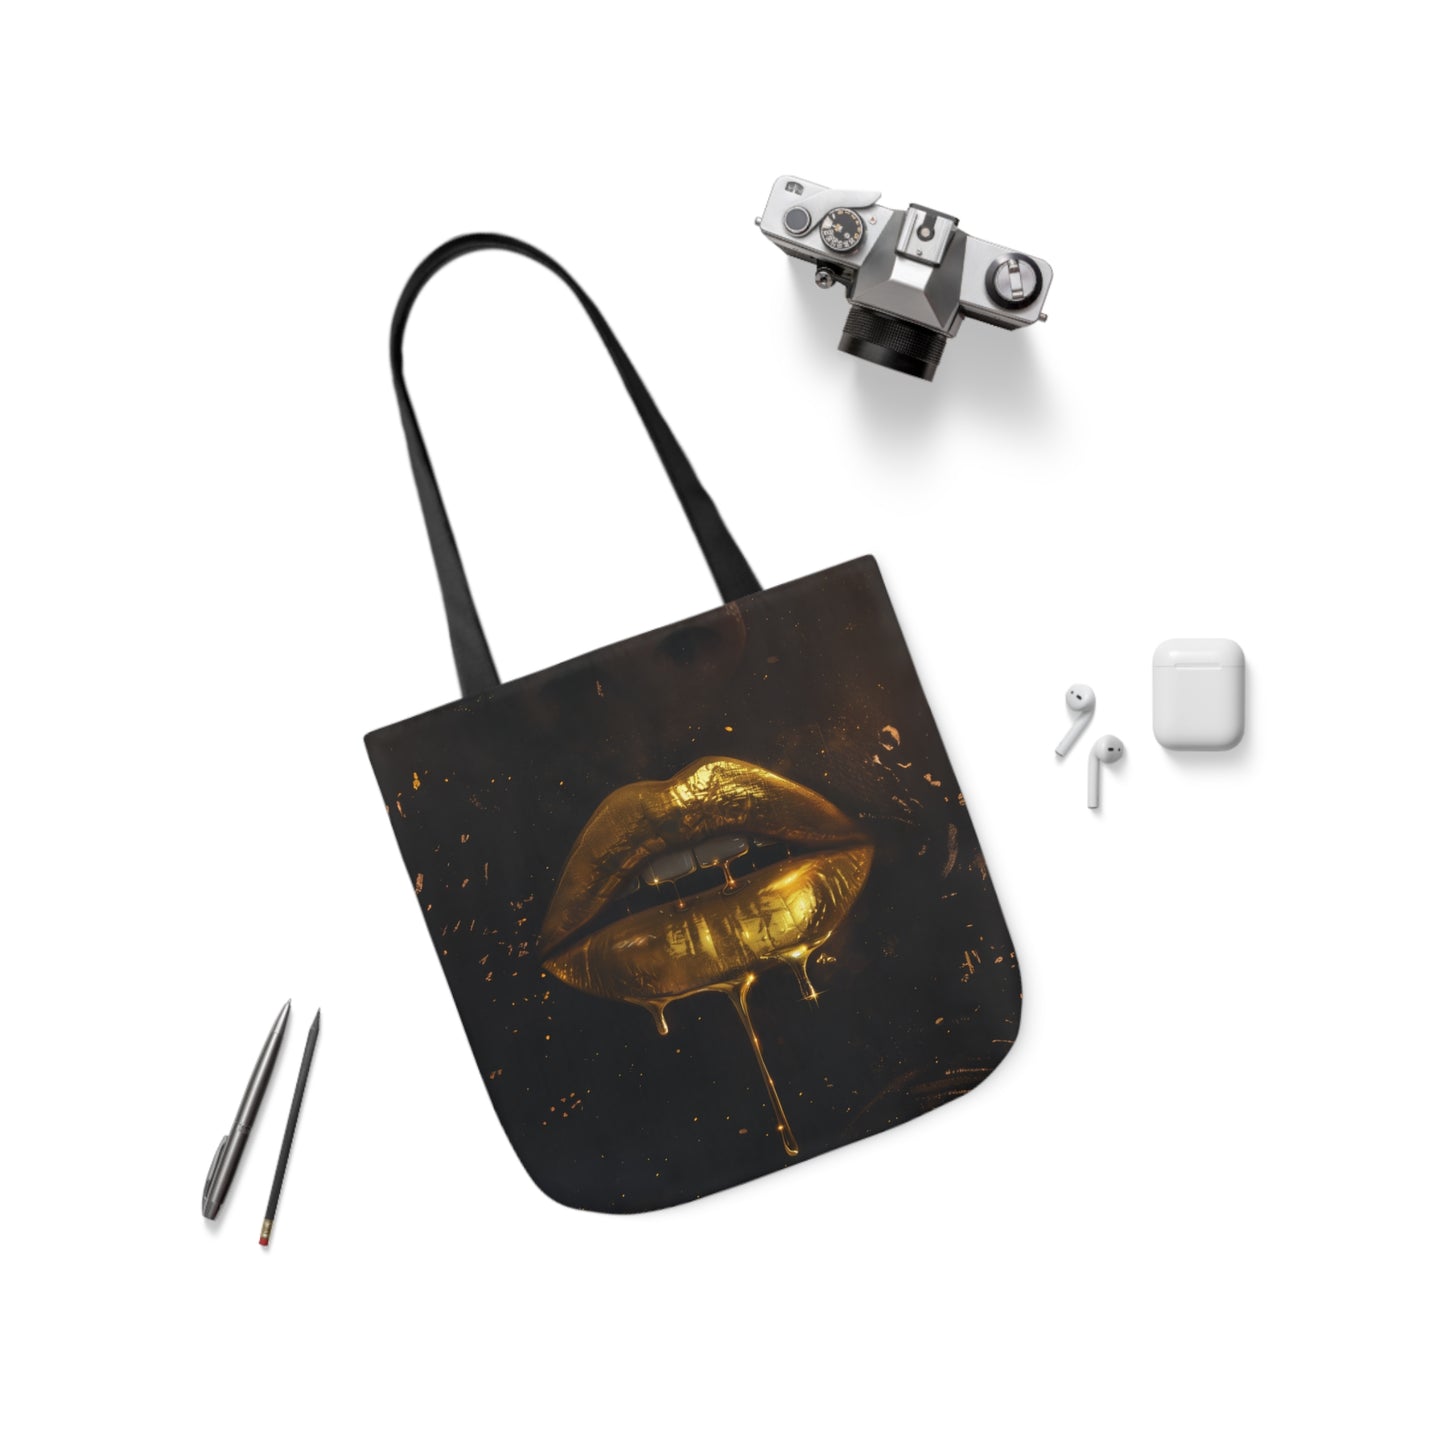 Gold Lip Drip - Canvas Tote Bag